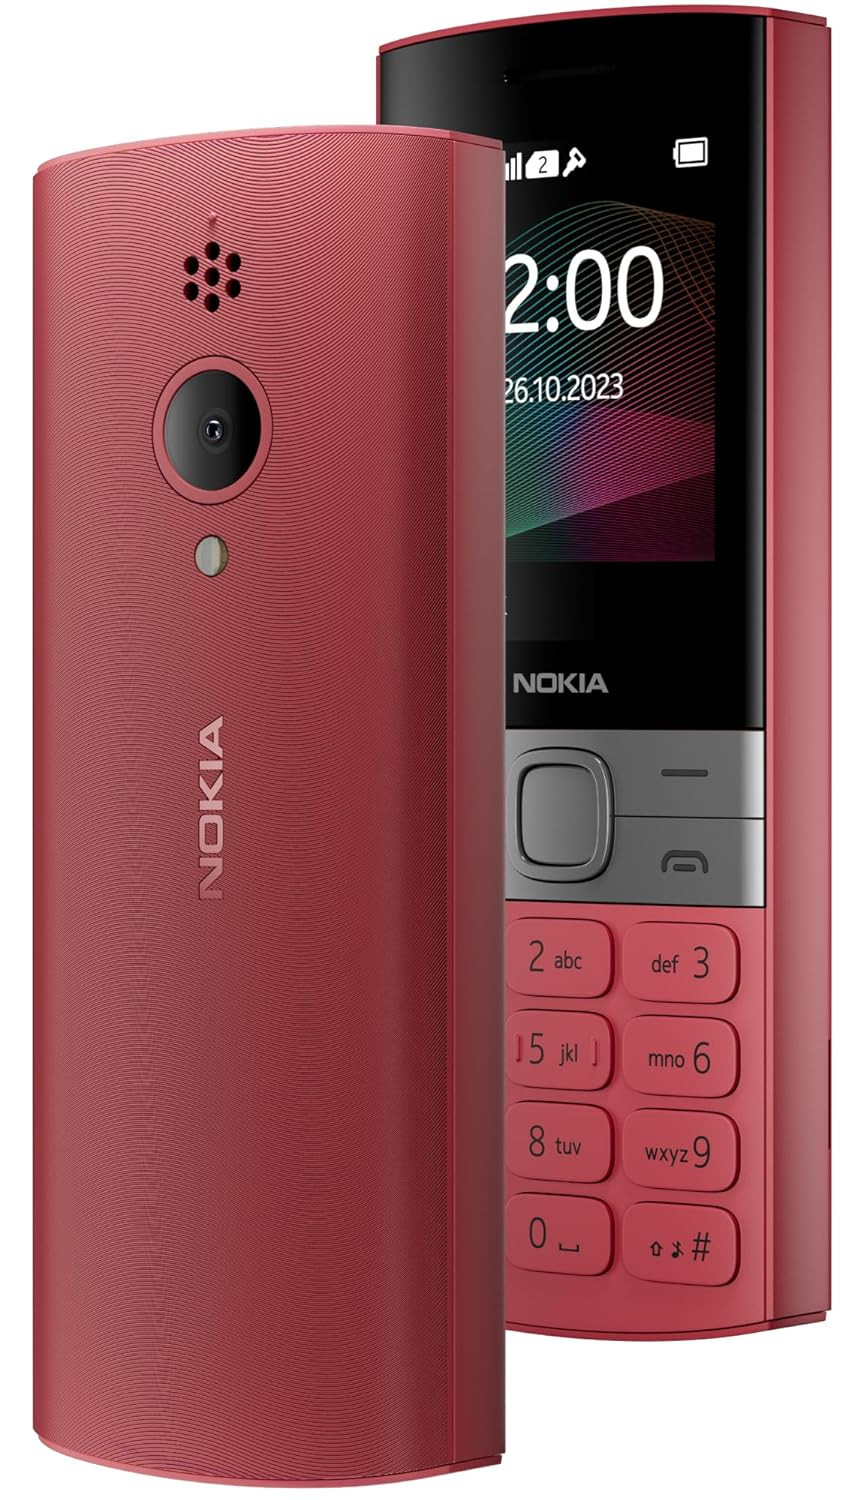 Nokia 150 Dual SIM Premium Keypad Phone | Rear Camera, Long Lasting Battery Life, Wireless FM Radio & MP3 Player and All-New Modern Premium Design | Red